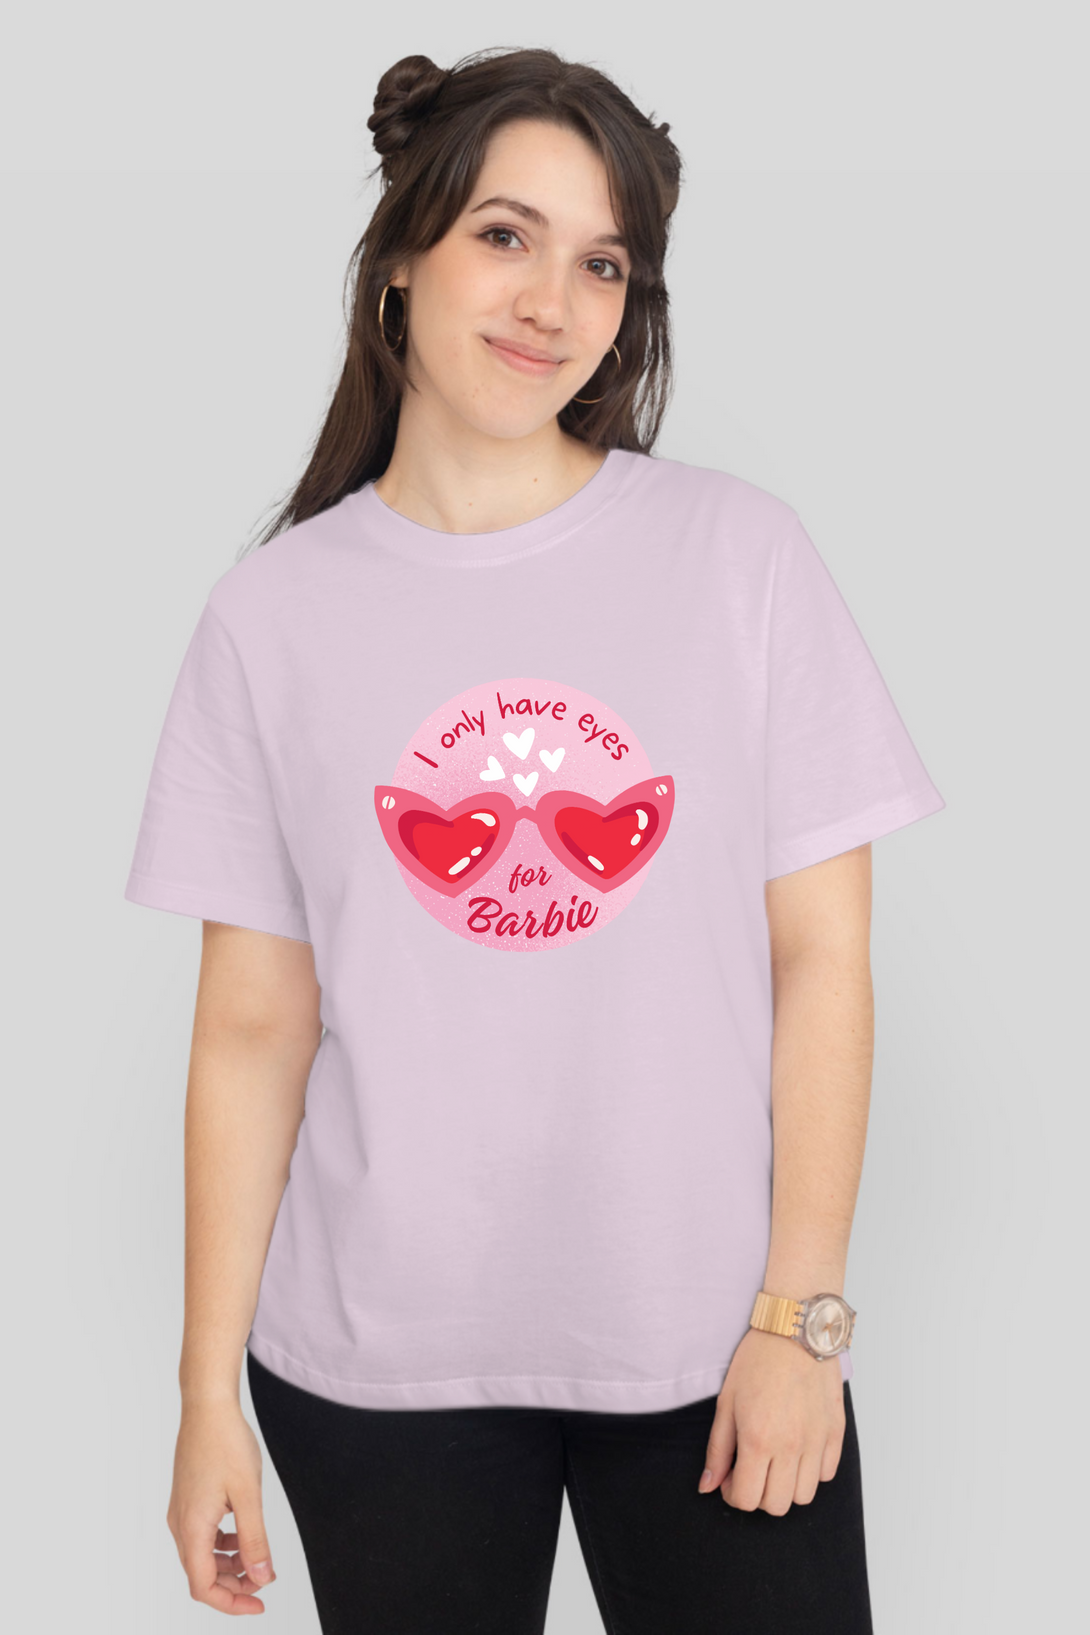 Barbie Eyes Printed T-Shirt For Women - WowWaves - 8